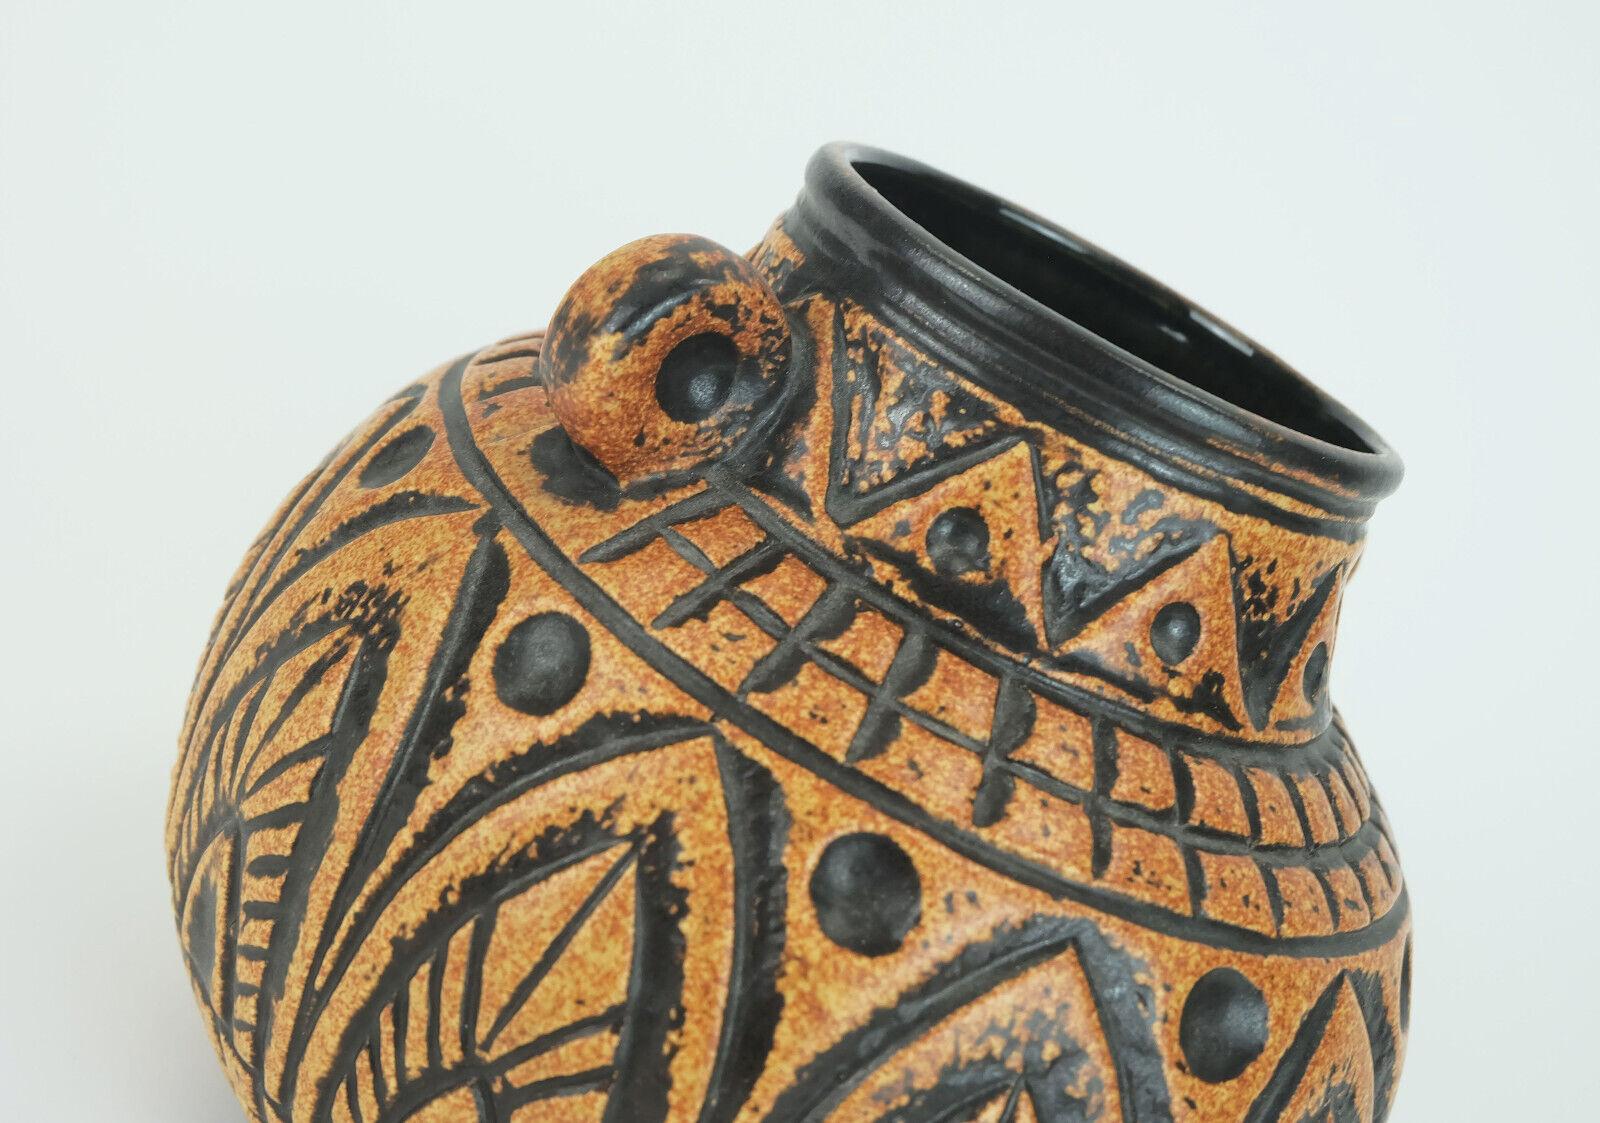 Ceramic mid century VASE jasba model N 312 11 20 abstract decor For Sale